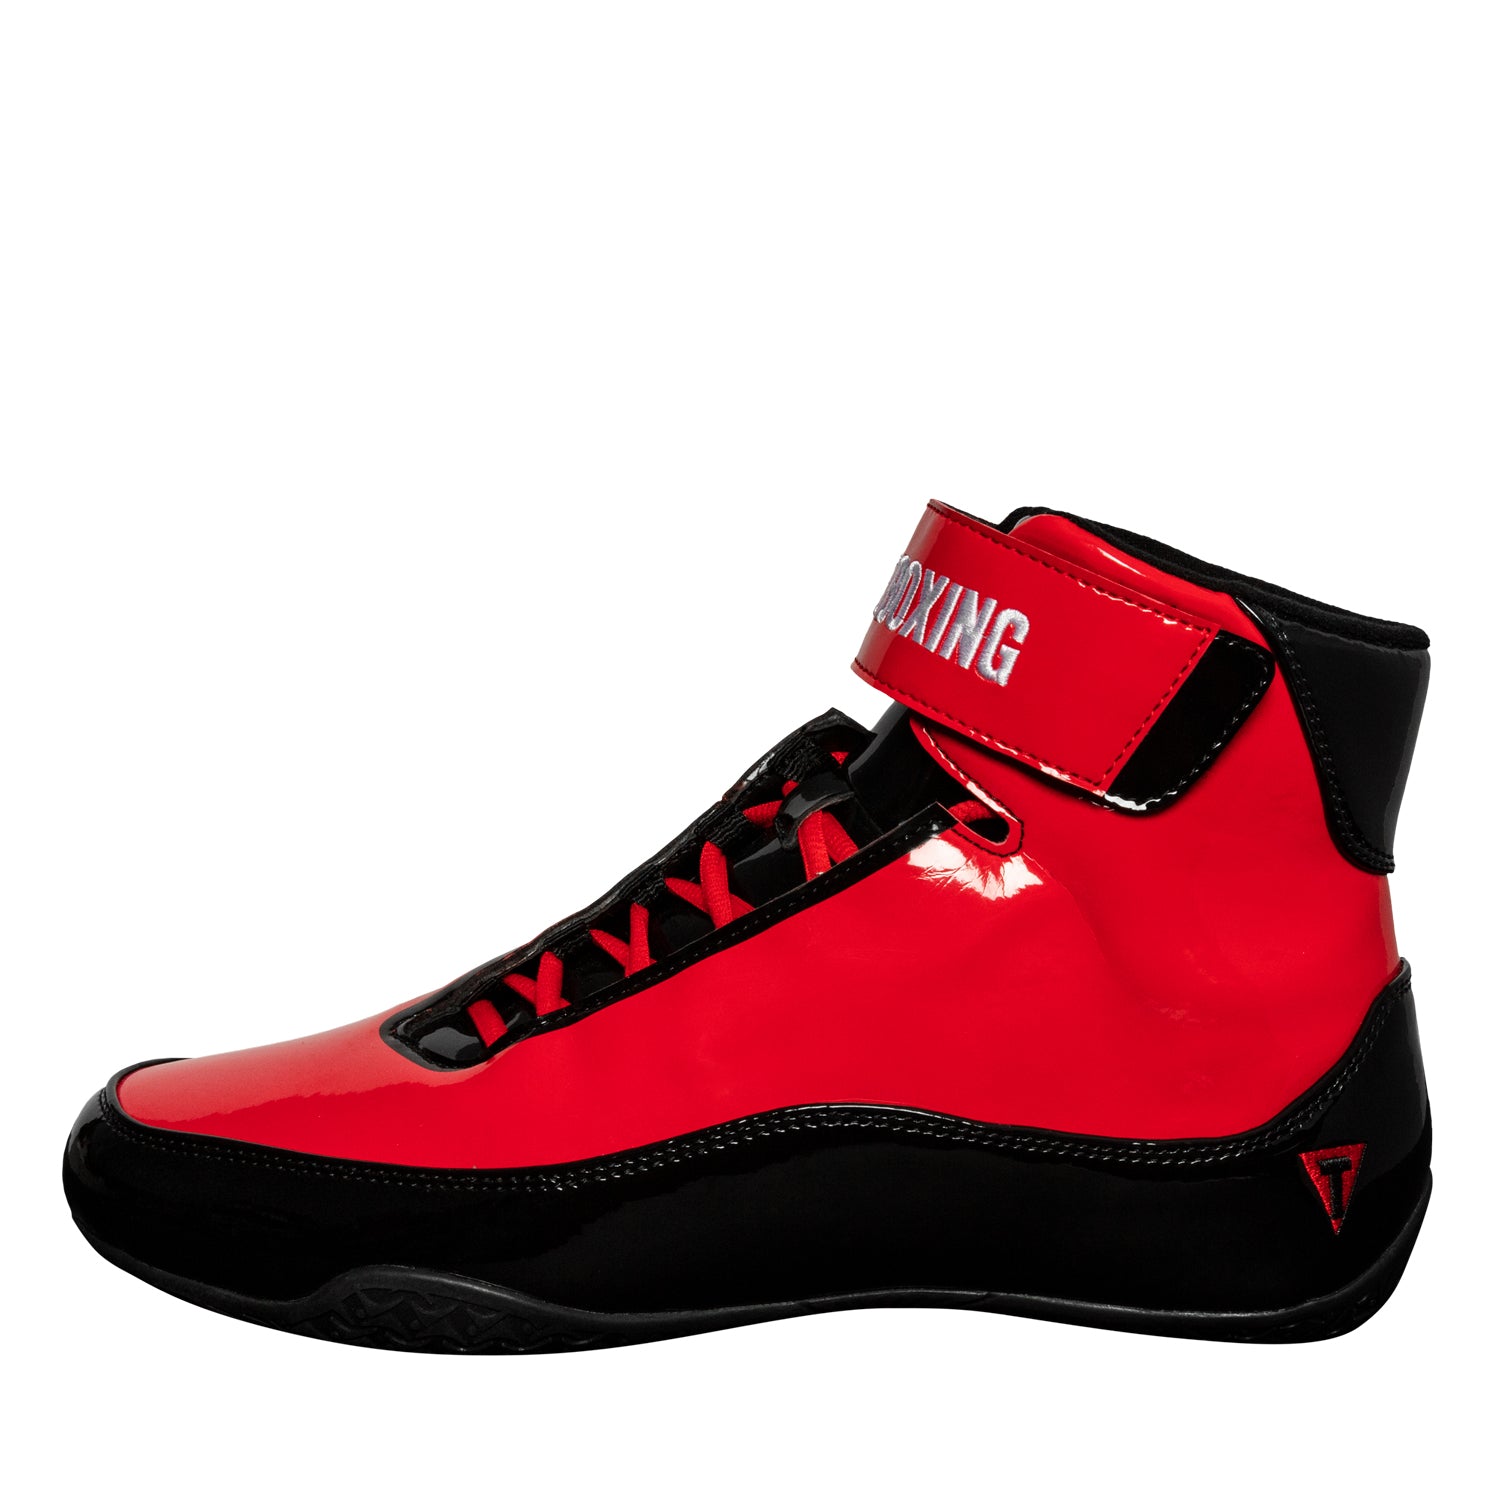 TITLE Ring Mamba Boxing Shoes